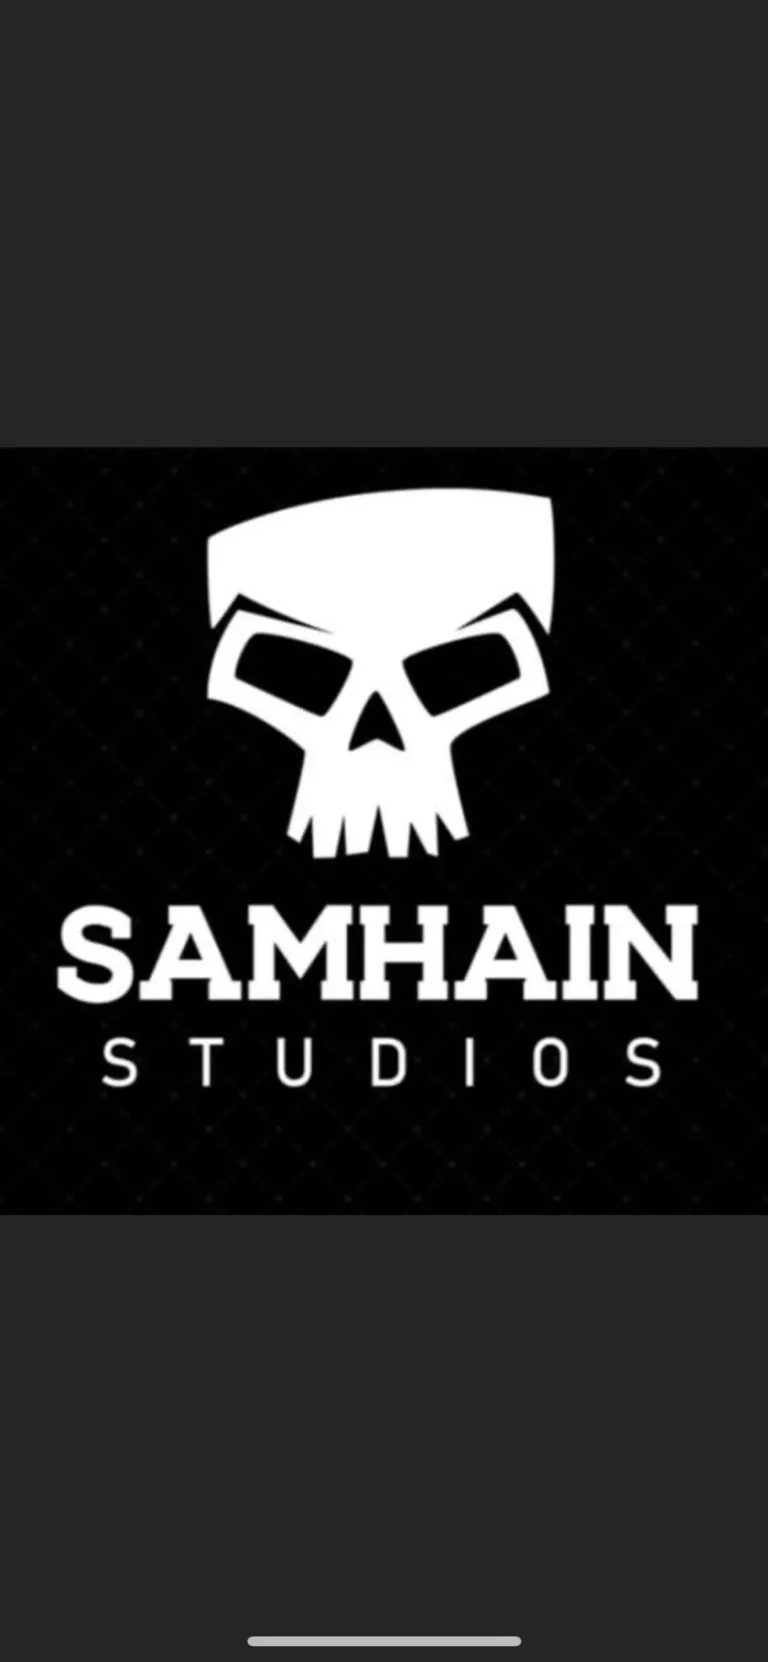 Samhain Studios logo on a black background.